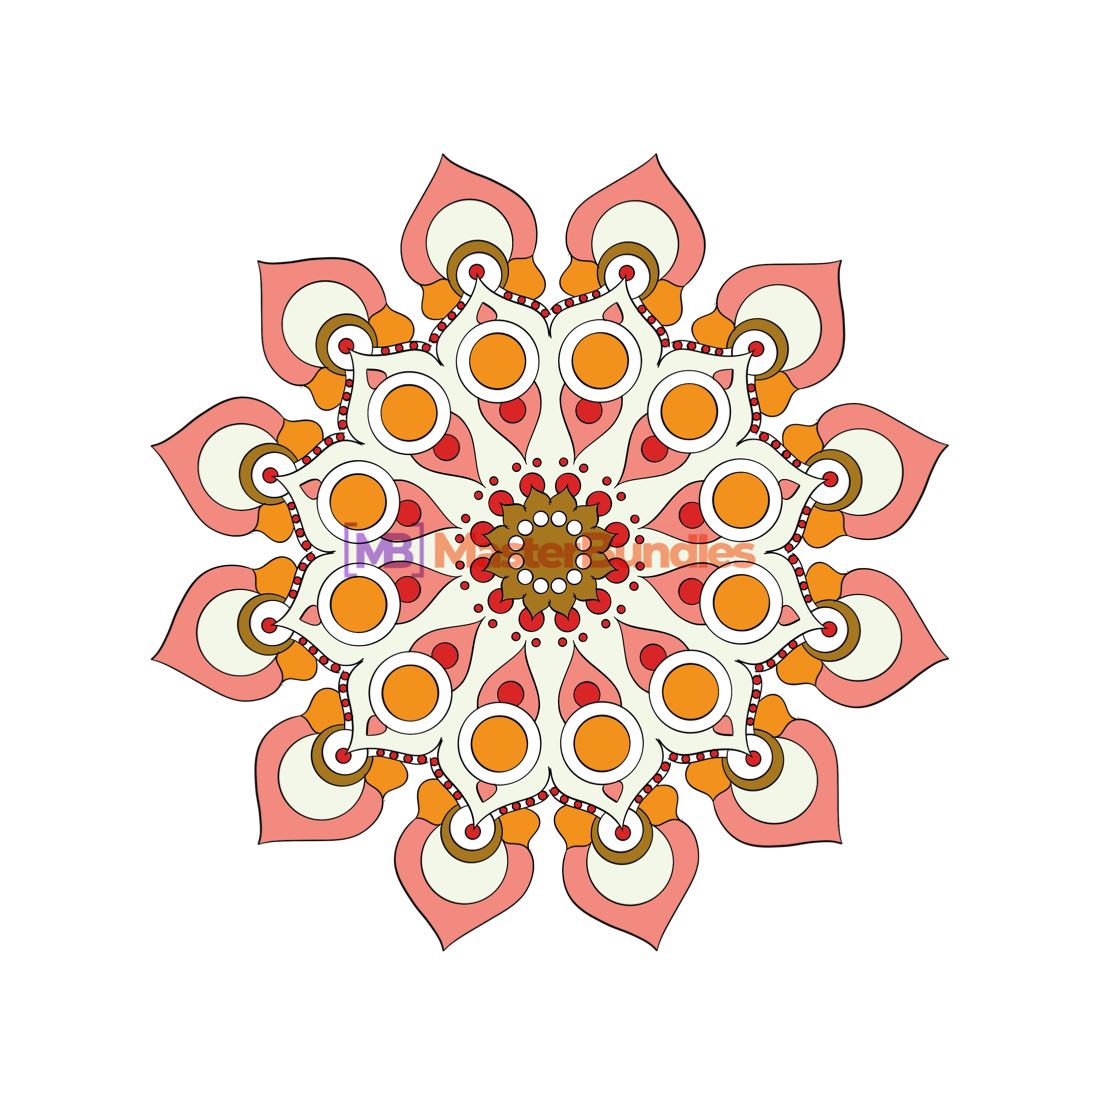 Colourful Mandala Design - Thin Strokes cover image.